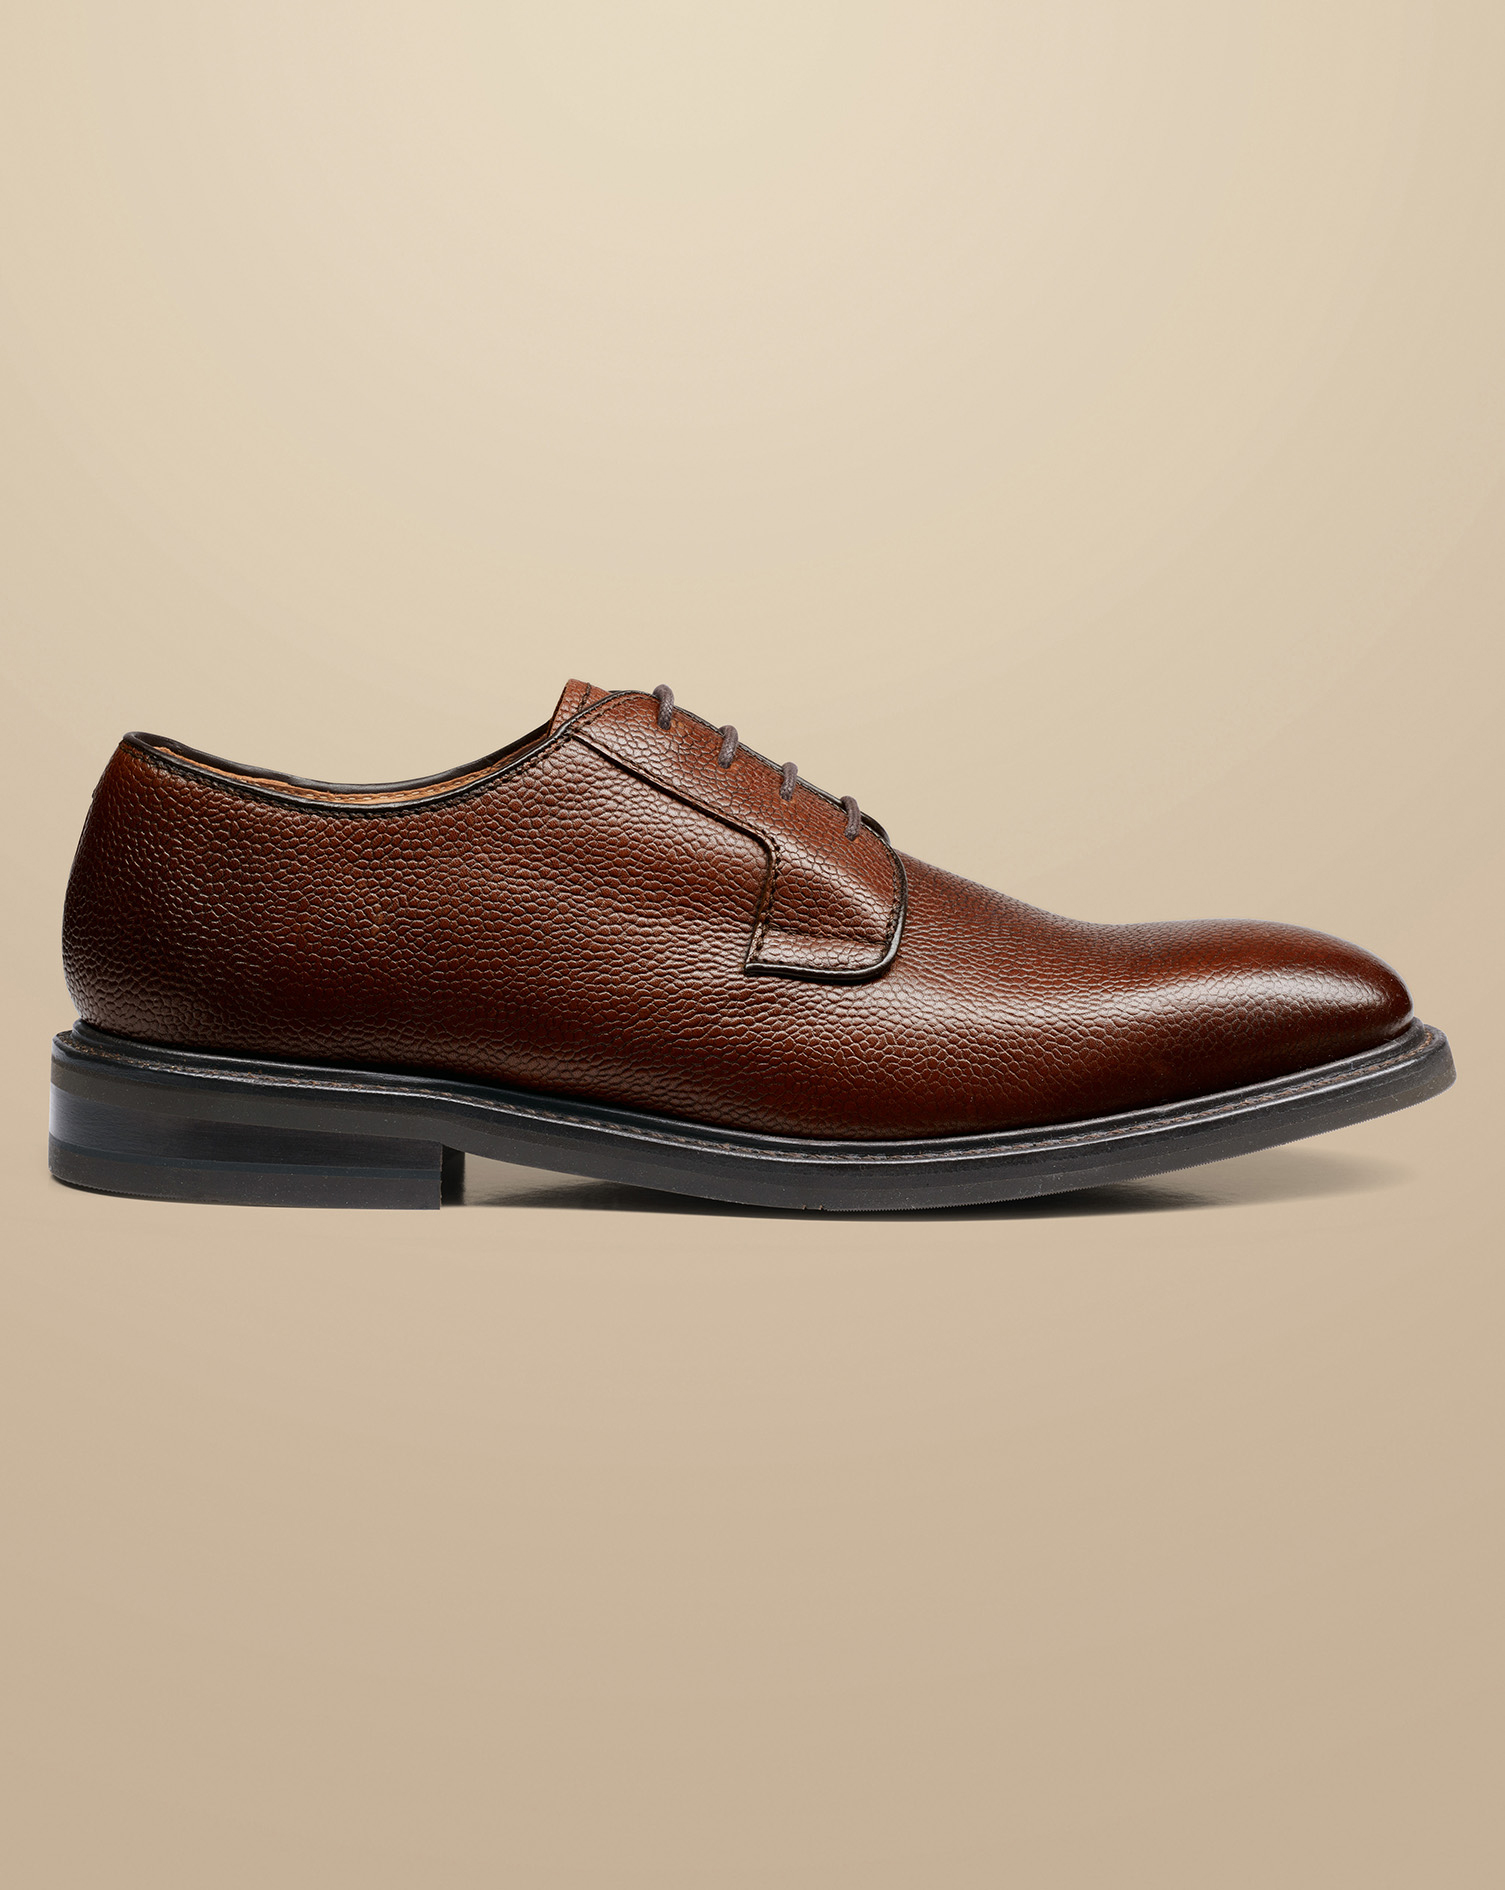 Men's Charles Tyrwhitt Grain Leather Derby Rubber Sole Shoe - Chestnut Brown Size 11.5
